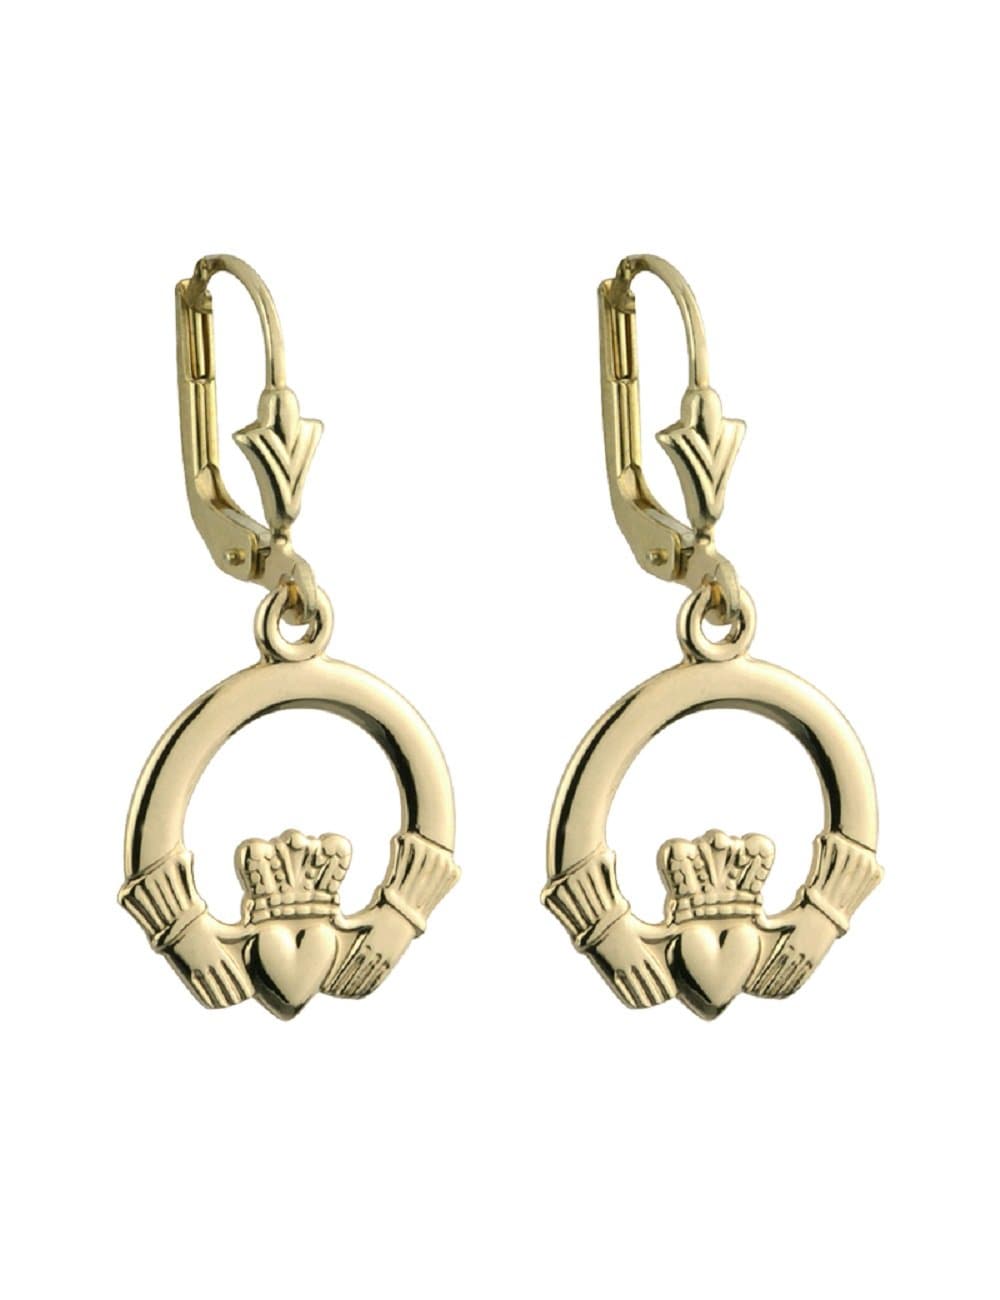 14K Gold Claddagh Dangle Earrings: A Touch of Irish Elegance